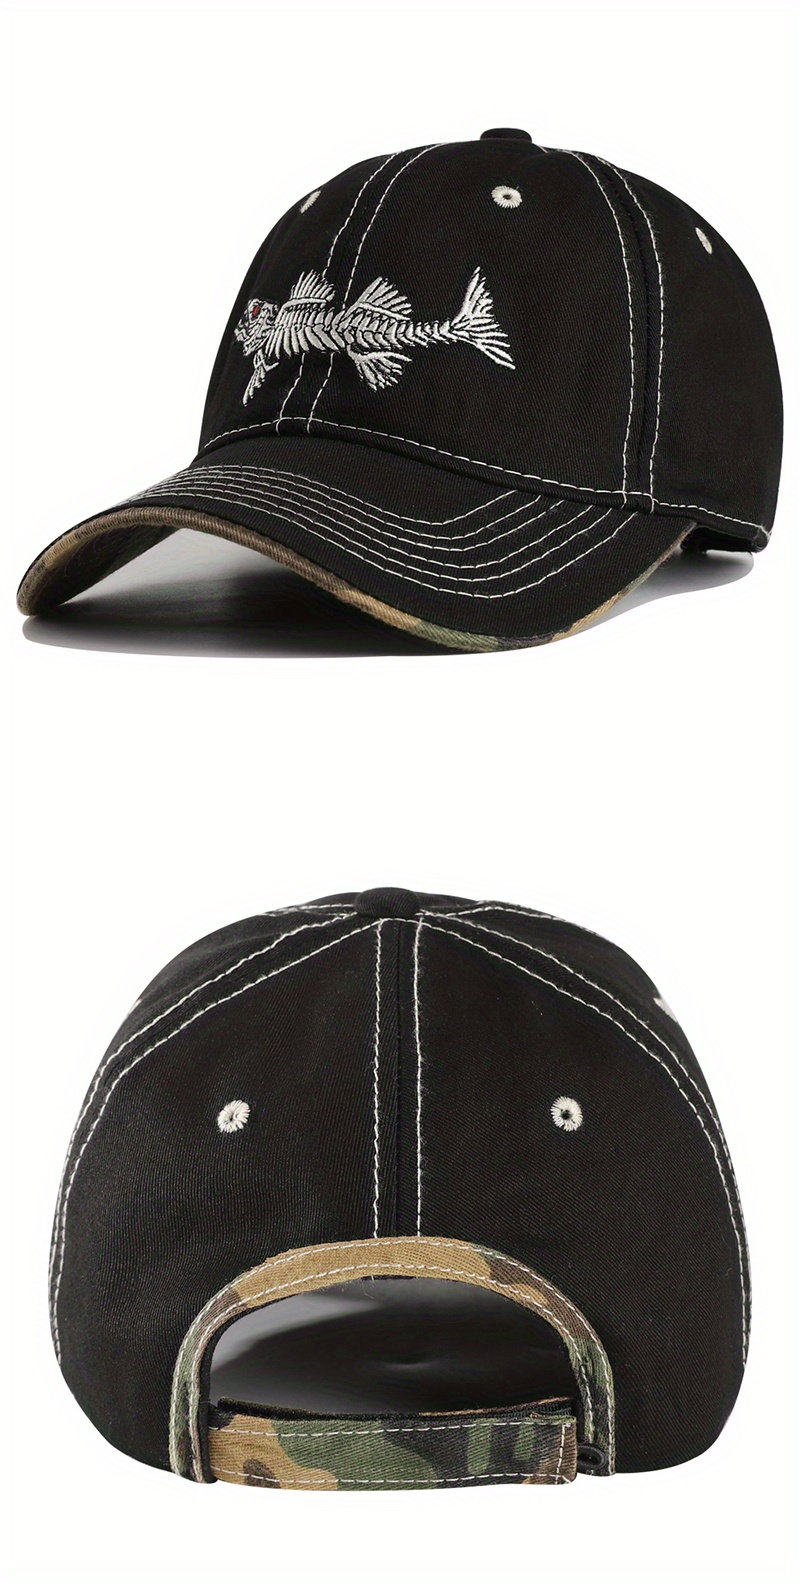 9 Fishing Hats ideas  fishing hat, hats, outdoor cap